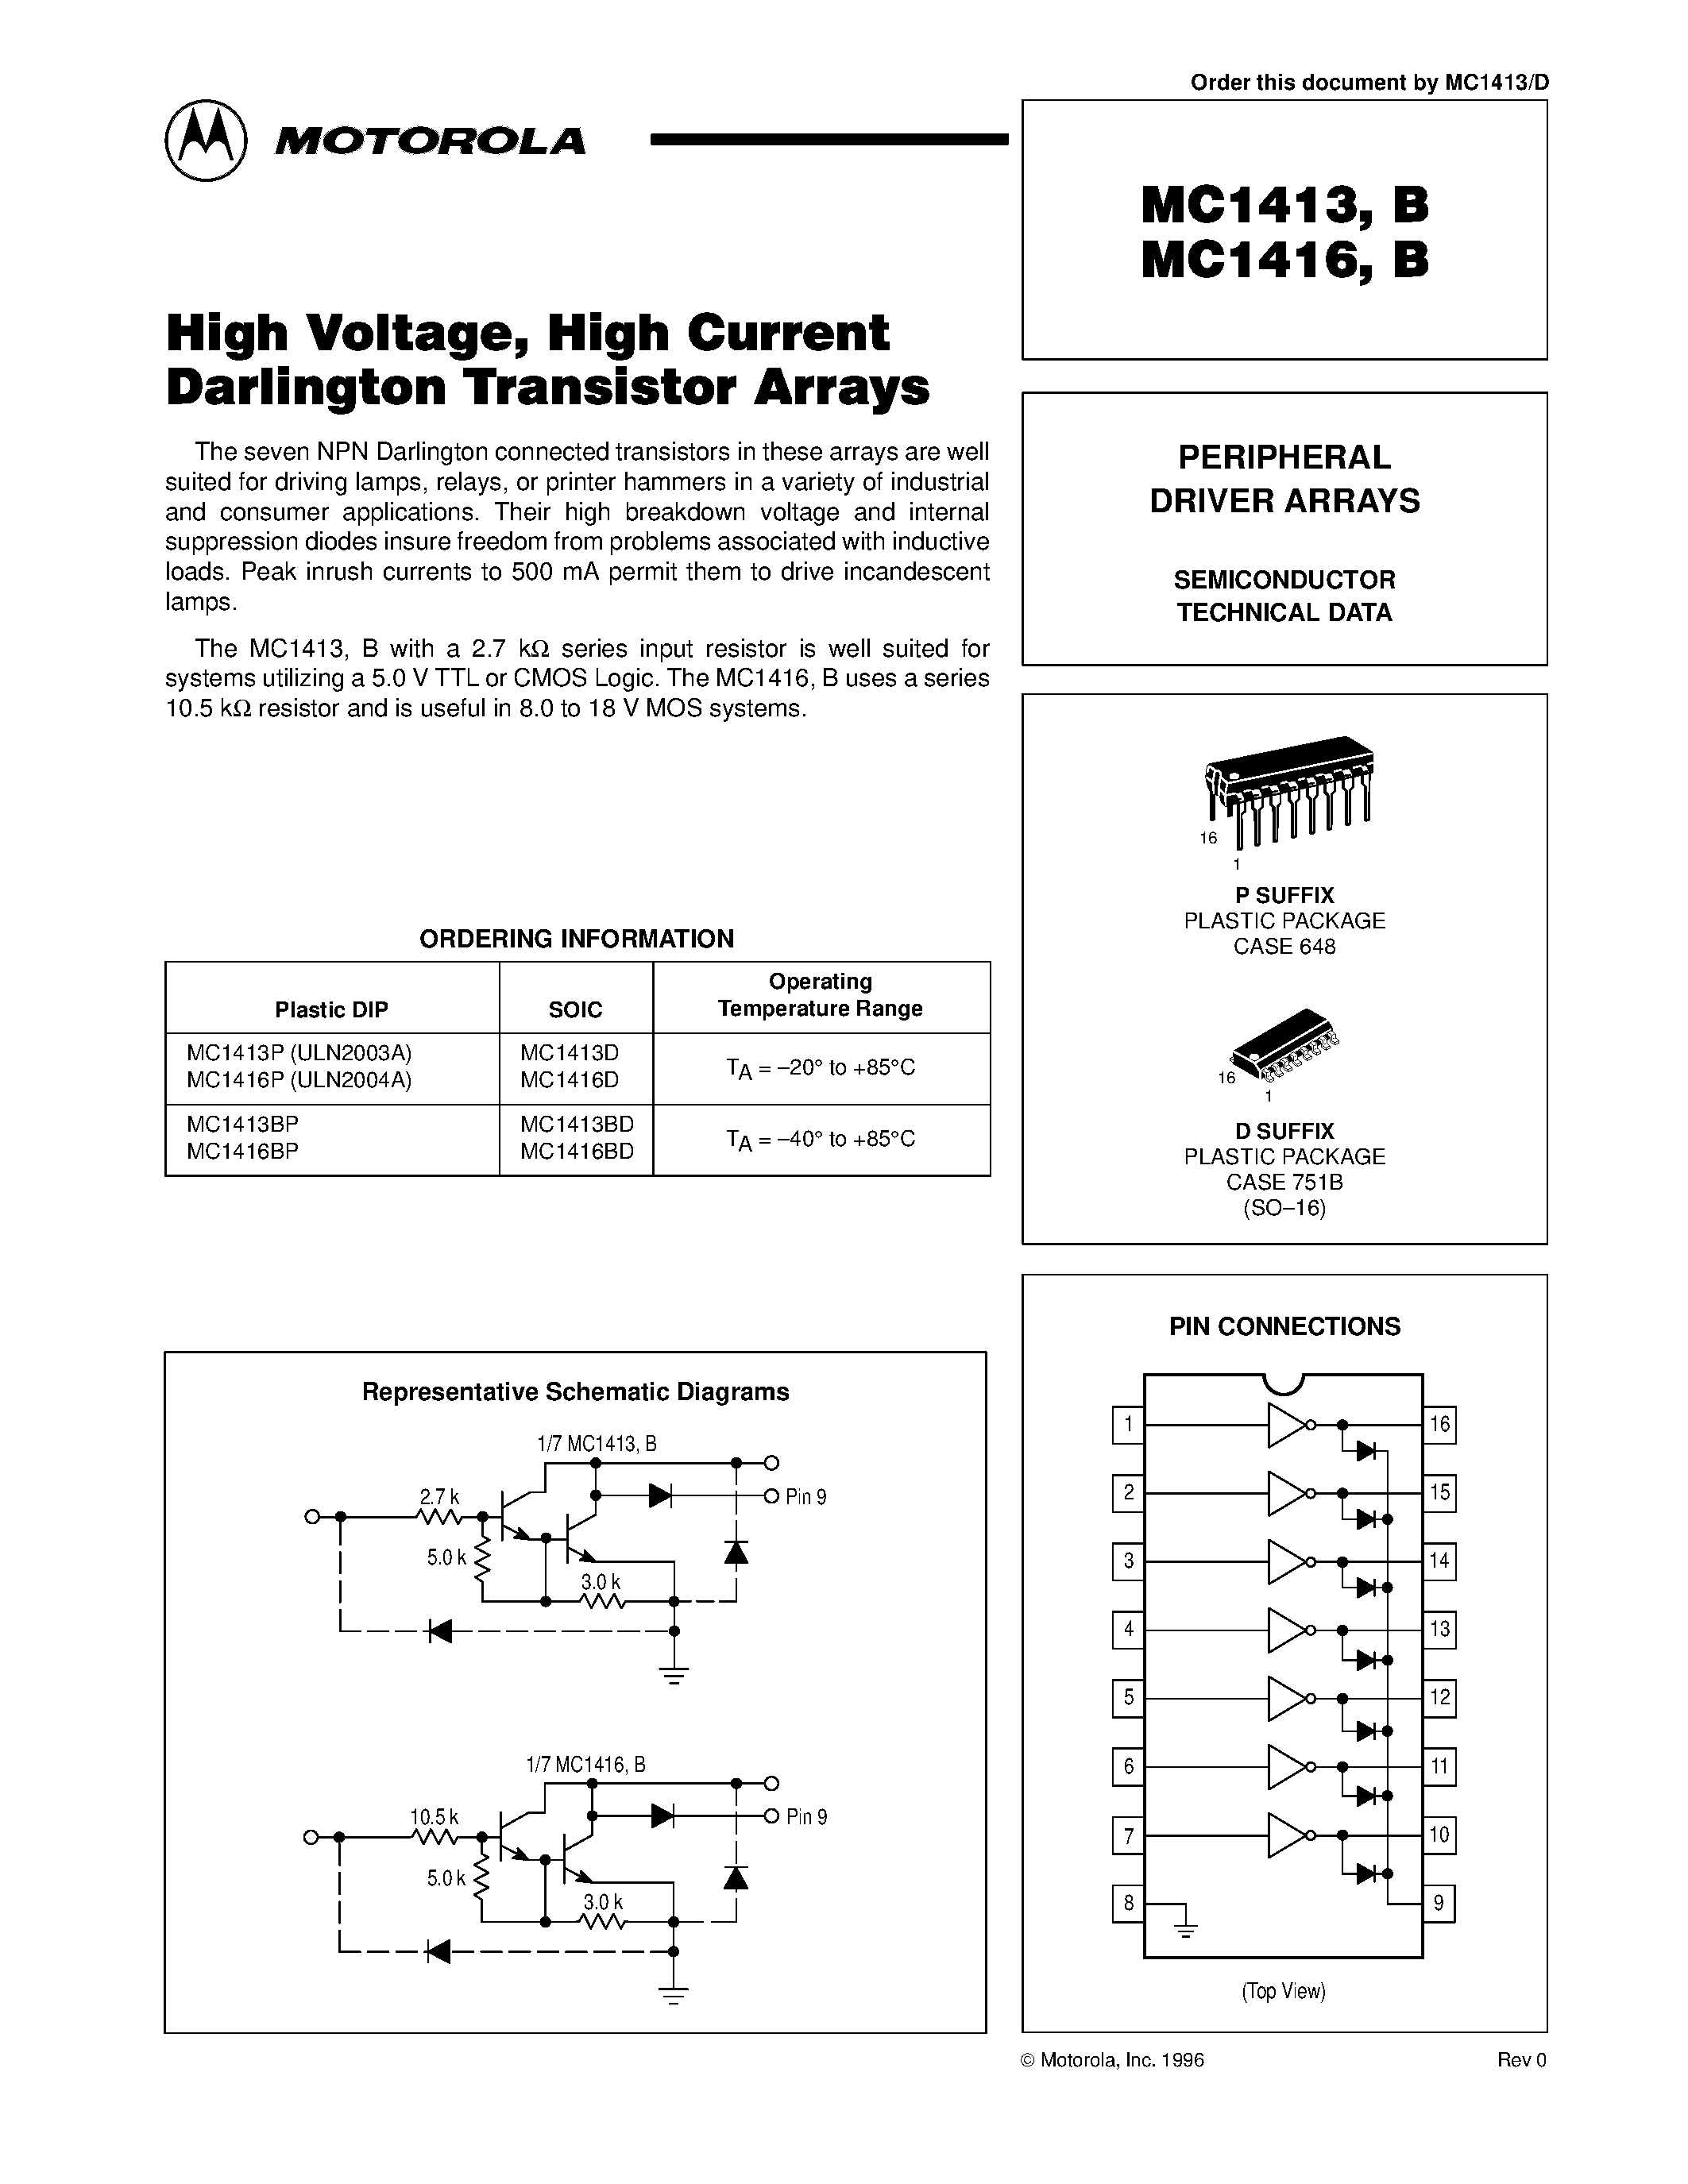 Datasheet MC1416BP - PERIPHERAL DRIVER ARRAYS page 1